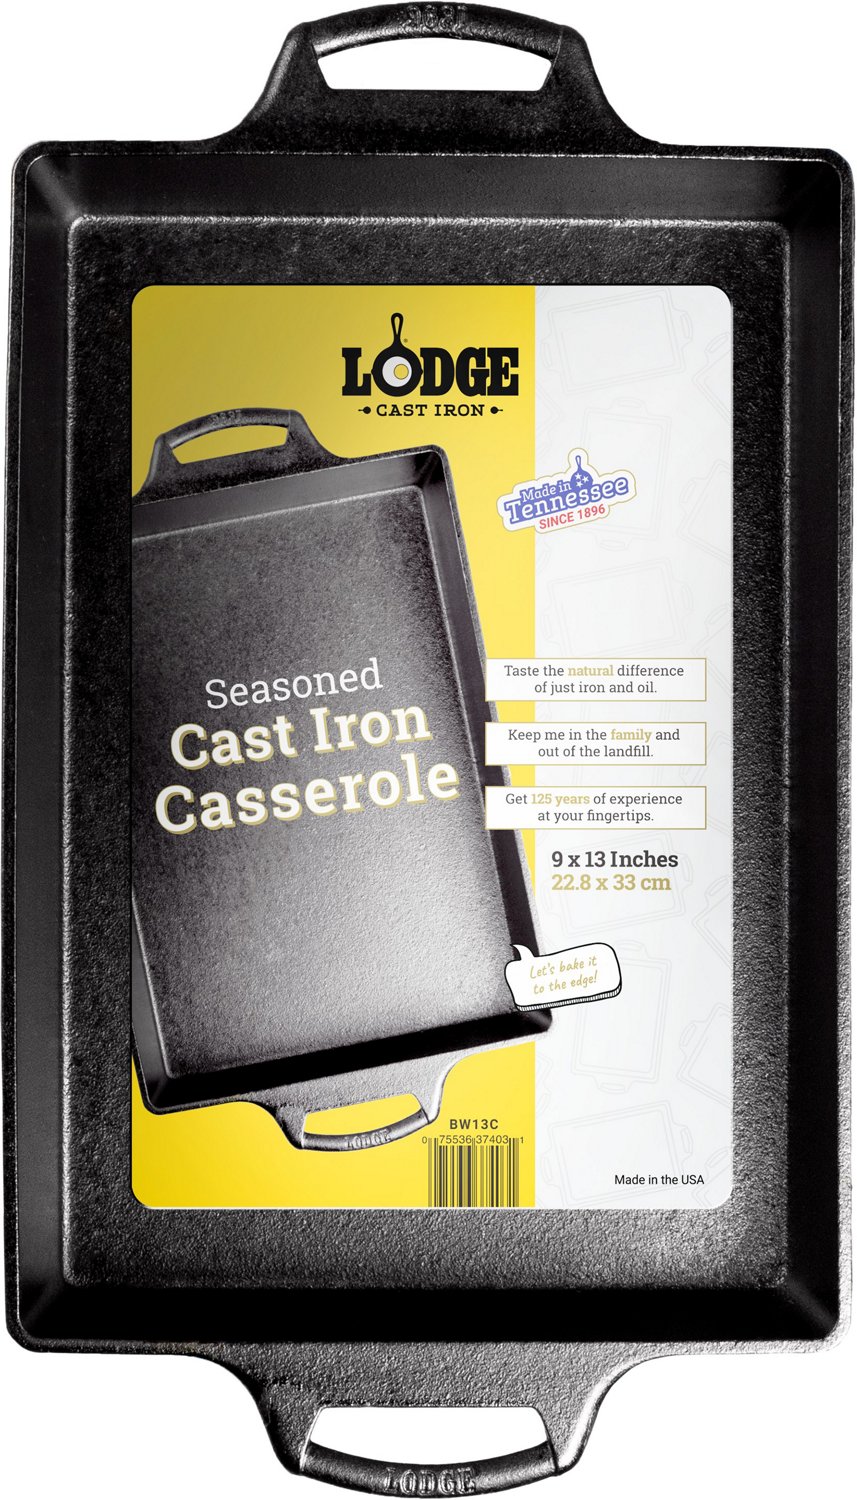 9 x 13 inch Seasoned Cast Iron Casserole Set